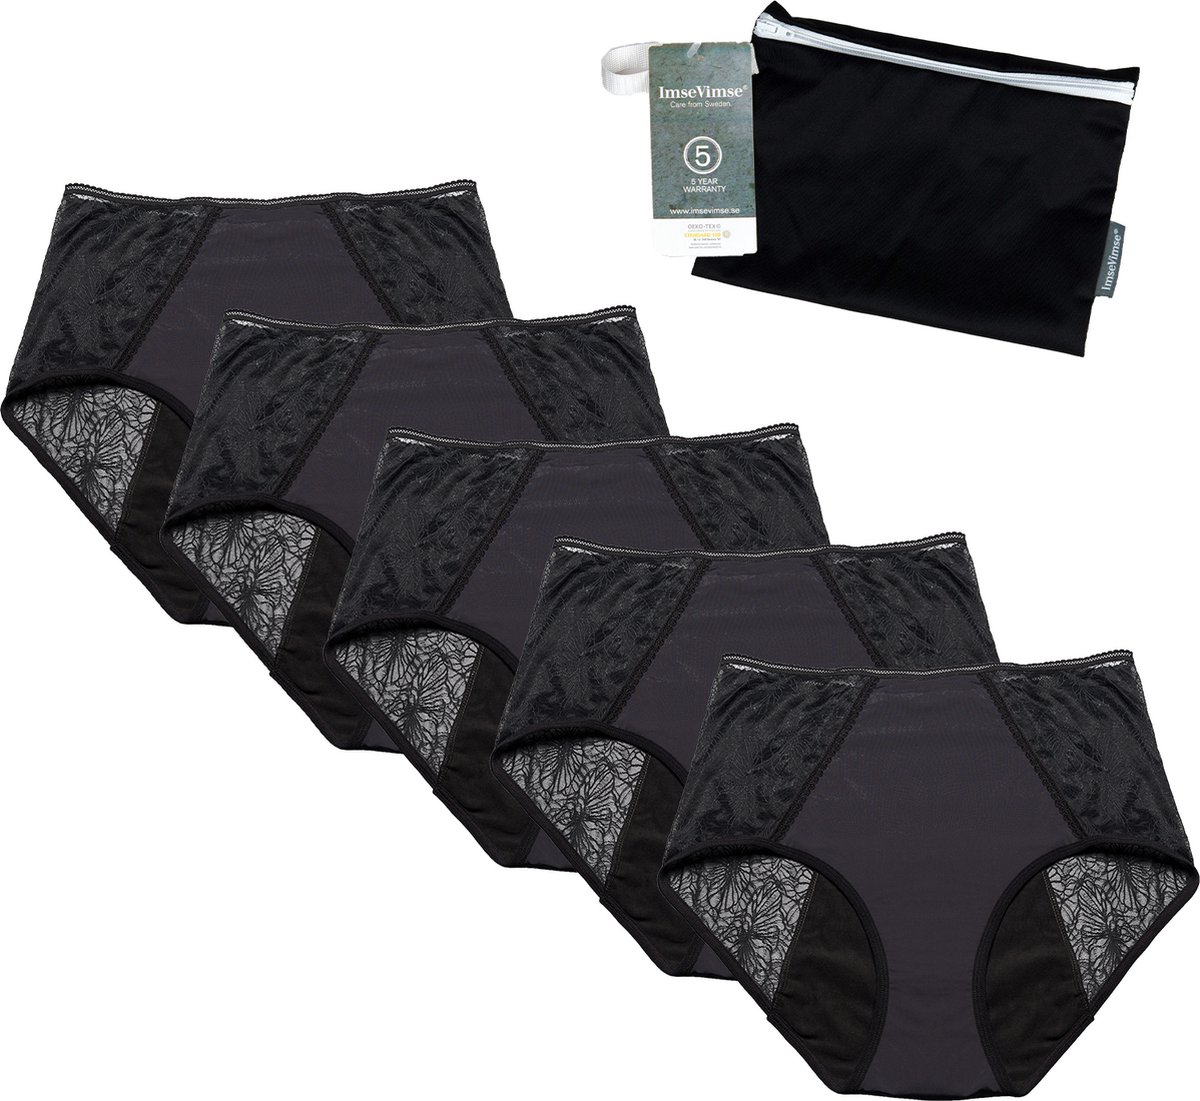 Cheeky Wipes Menstruatie ondergoed - Feeling Fearless + Wetbag - Set van 5 - Slip - Extra absorptie - Maat 38-40 - Zwart